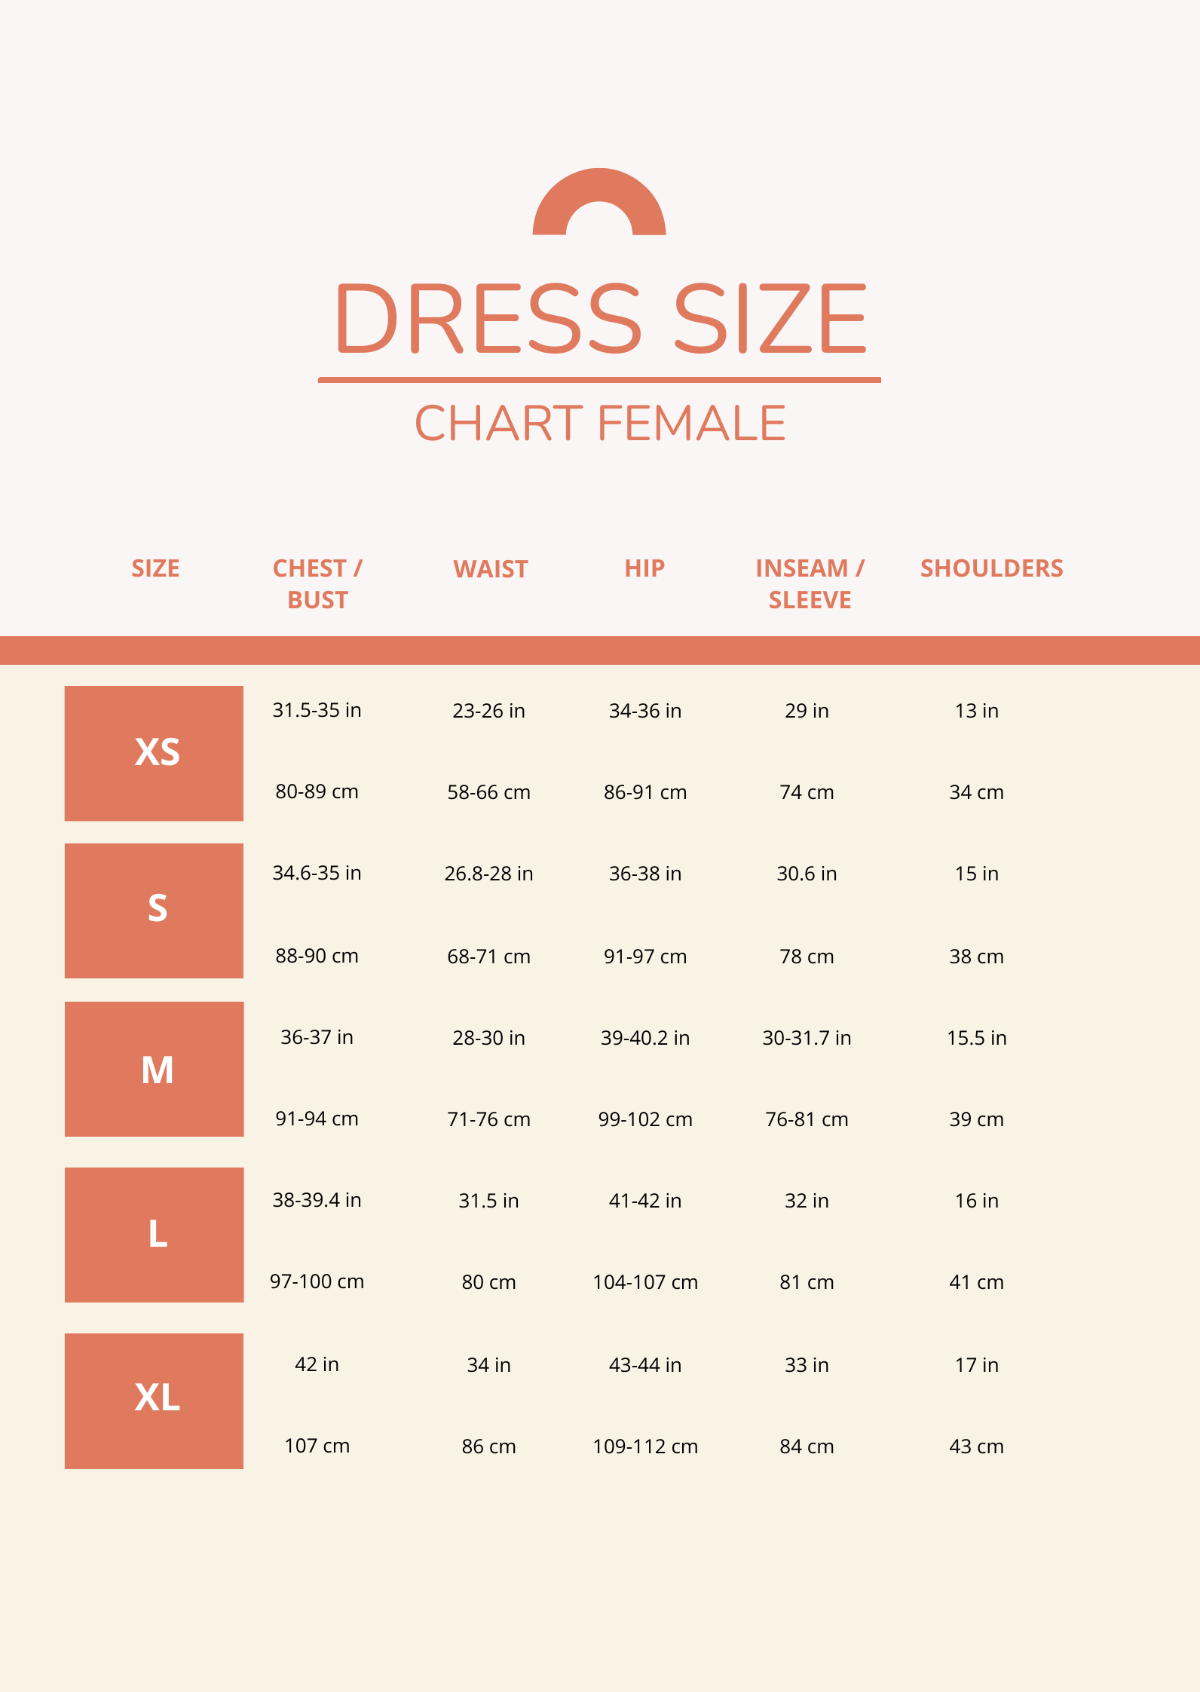 Free Dress Size Chart Female Template